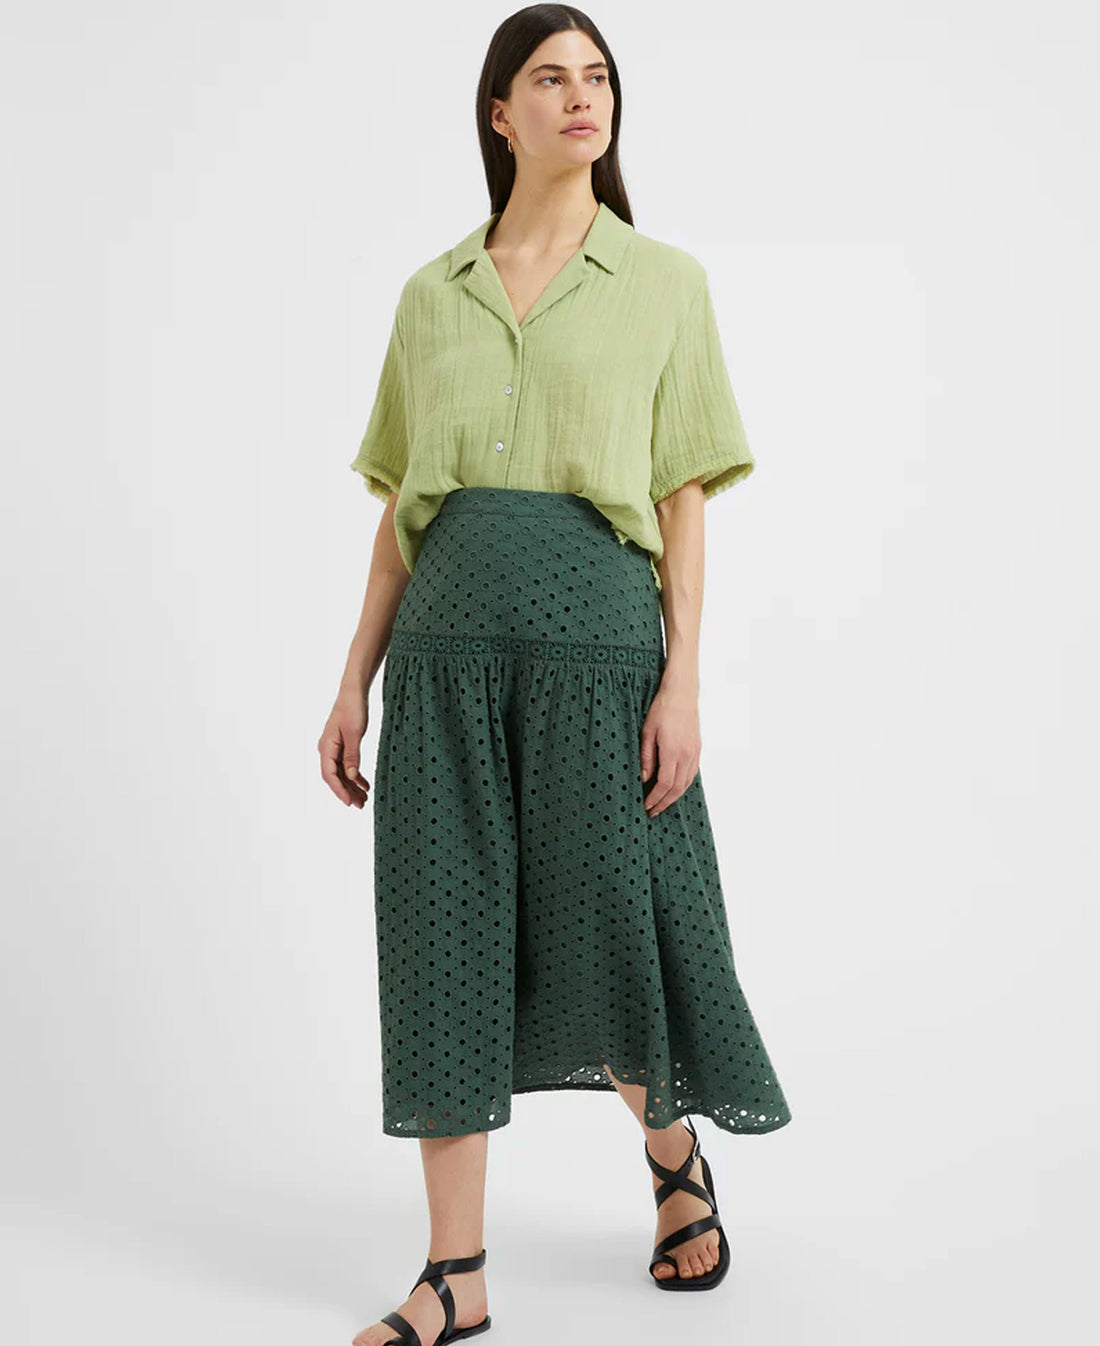 Atol Embroidery Midi Skirt - Tropical Green